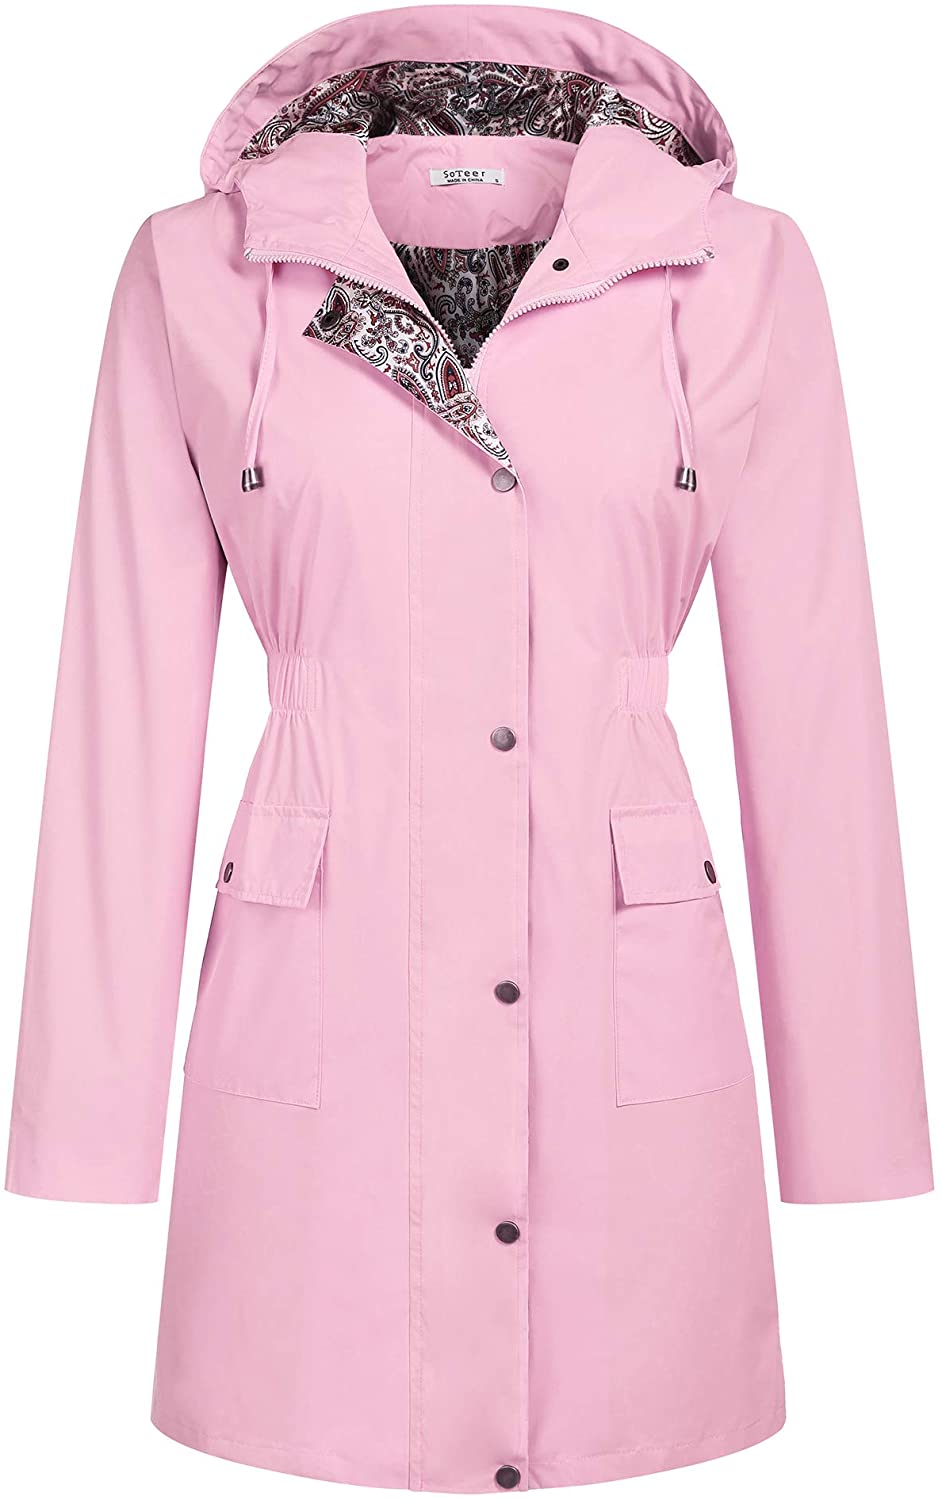 soteer Womens Casual Lightweight Waterproof Rain Jacket Long Sleeve Hooded Raincoat Outerwear 